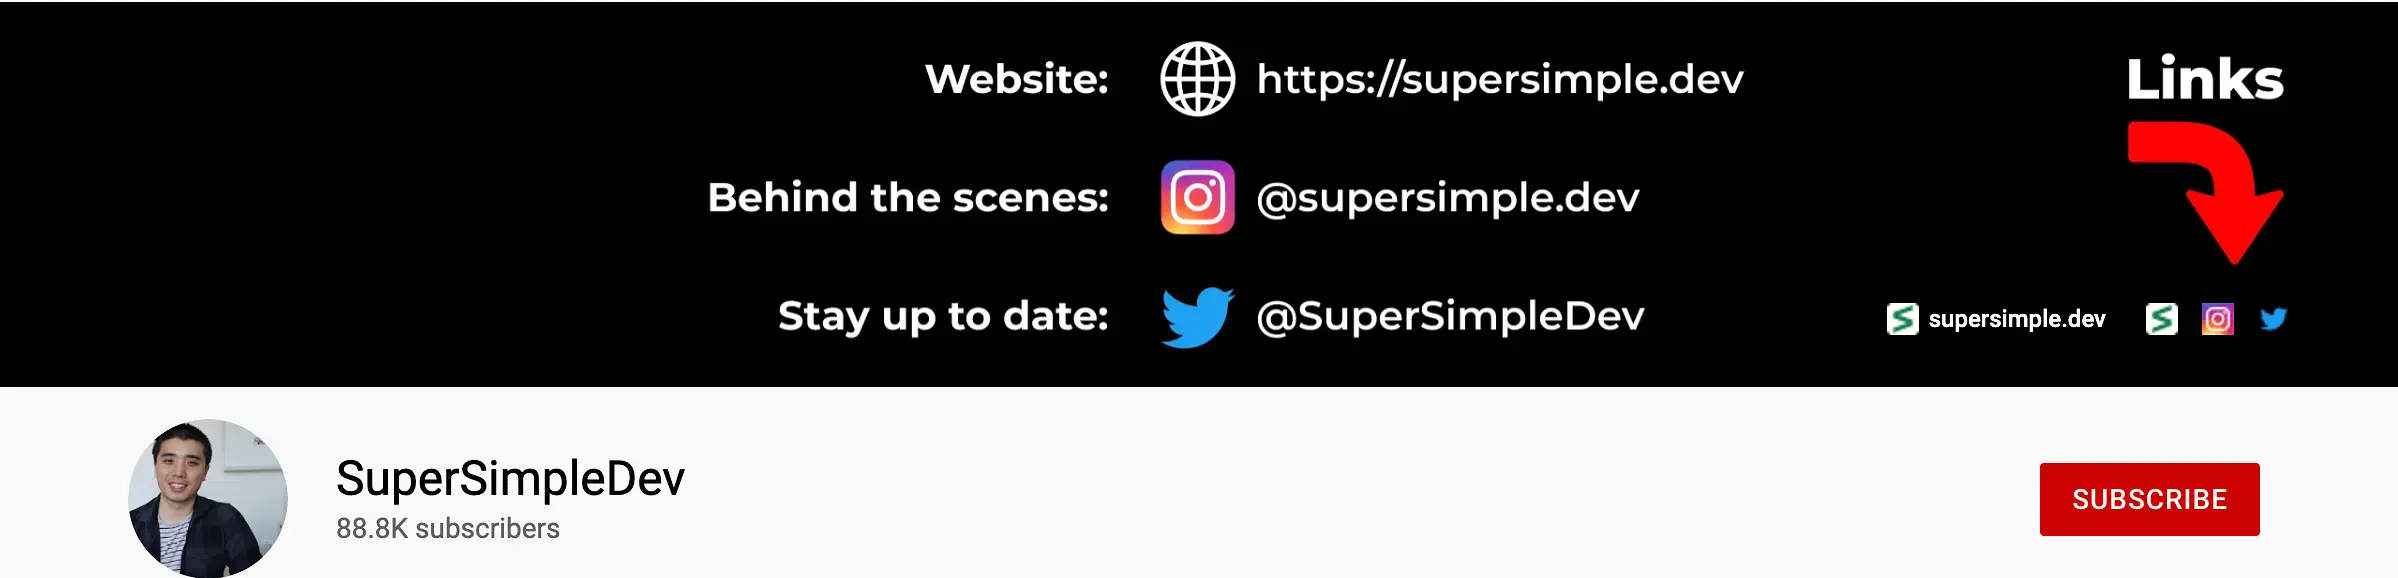 SuperSimpleDev Youtube Channel